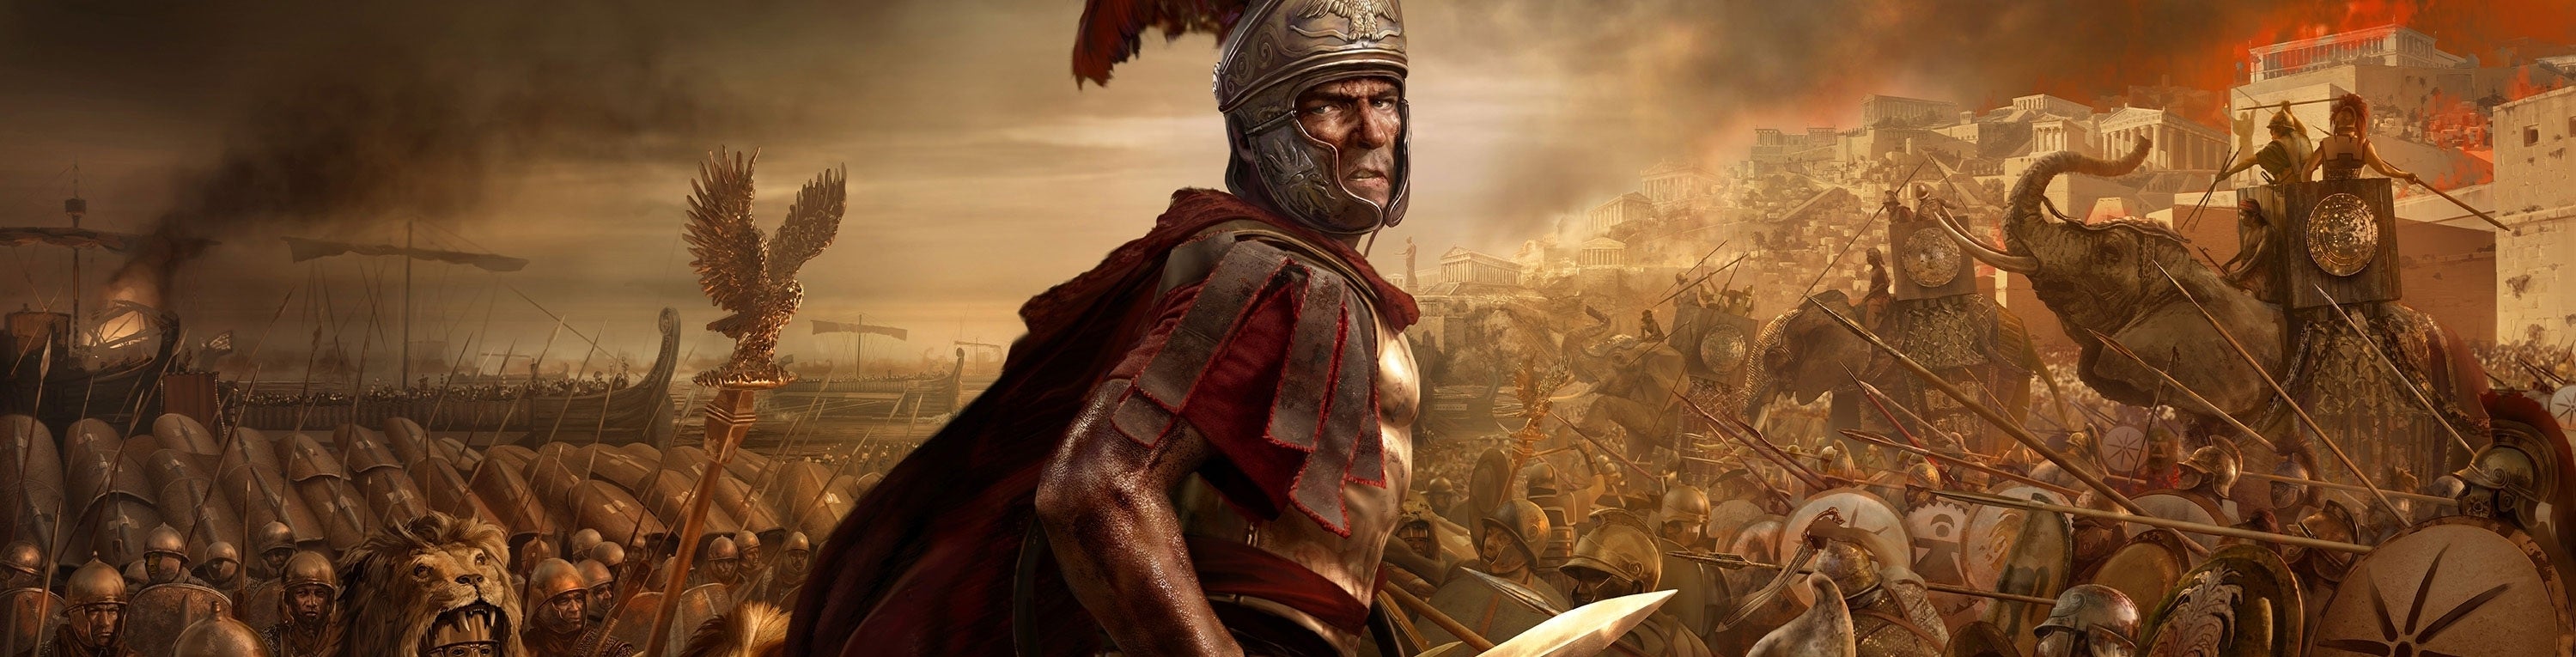 Imagen para Análisis de Total War: Rome 2